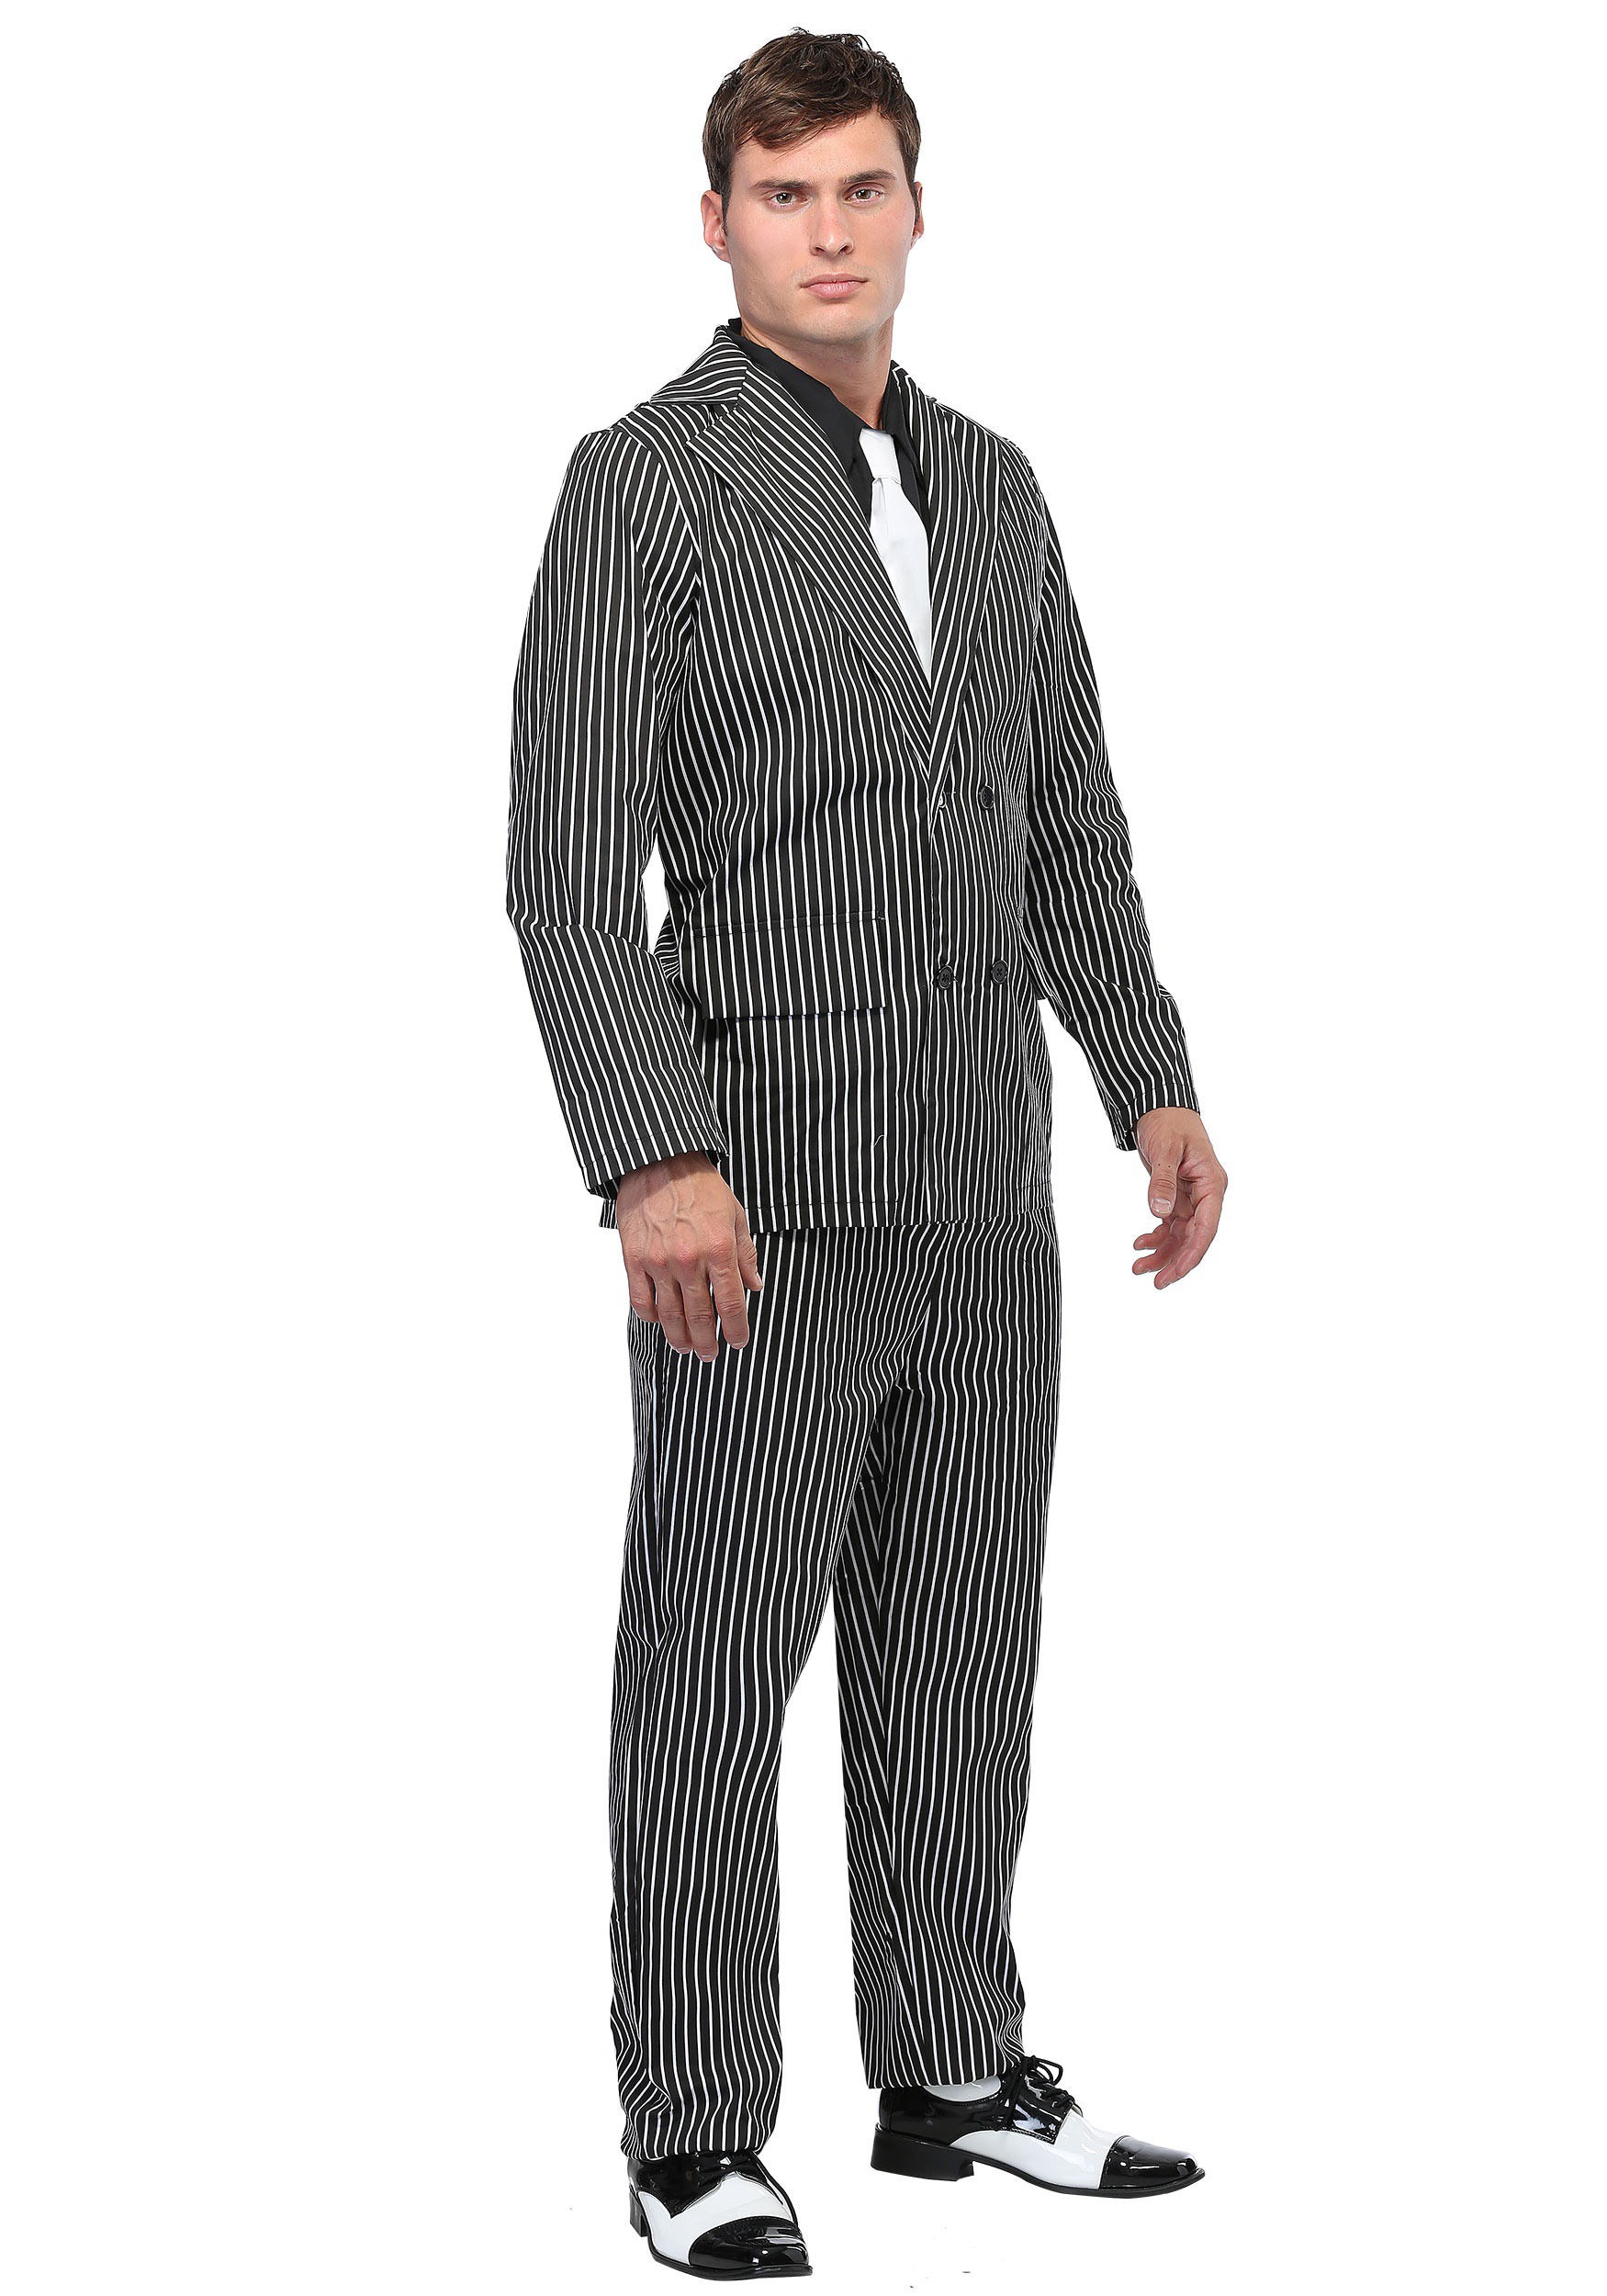 Photos - Fancy Dress FUN Costumes Wide Stripe Plus Size Gangster Suit Costume for Men Black/